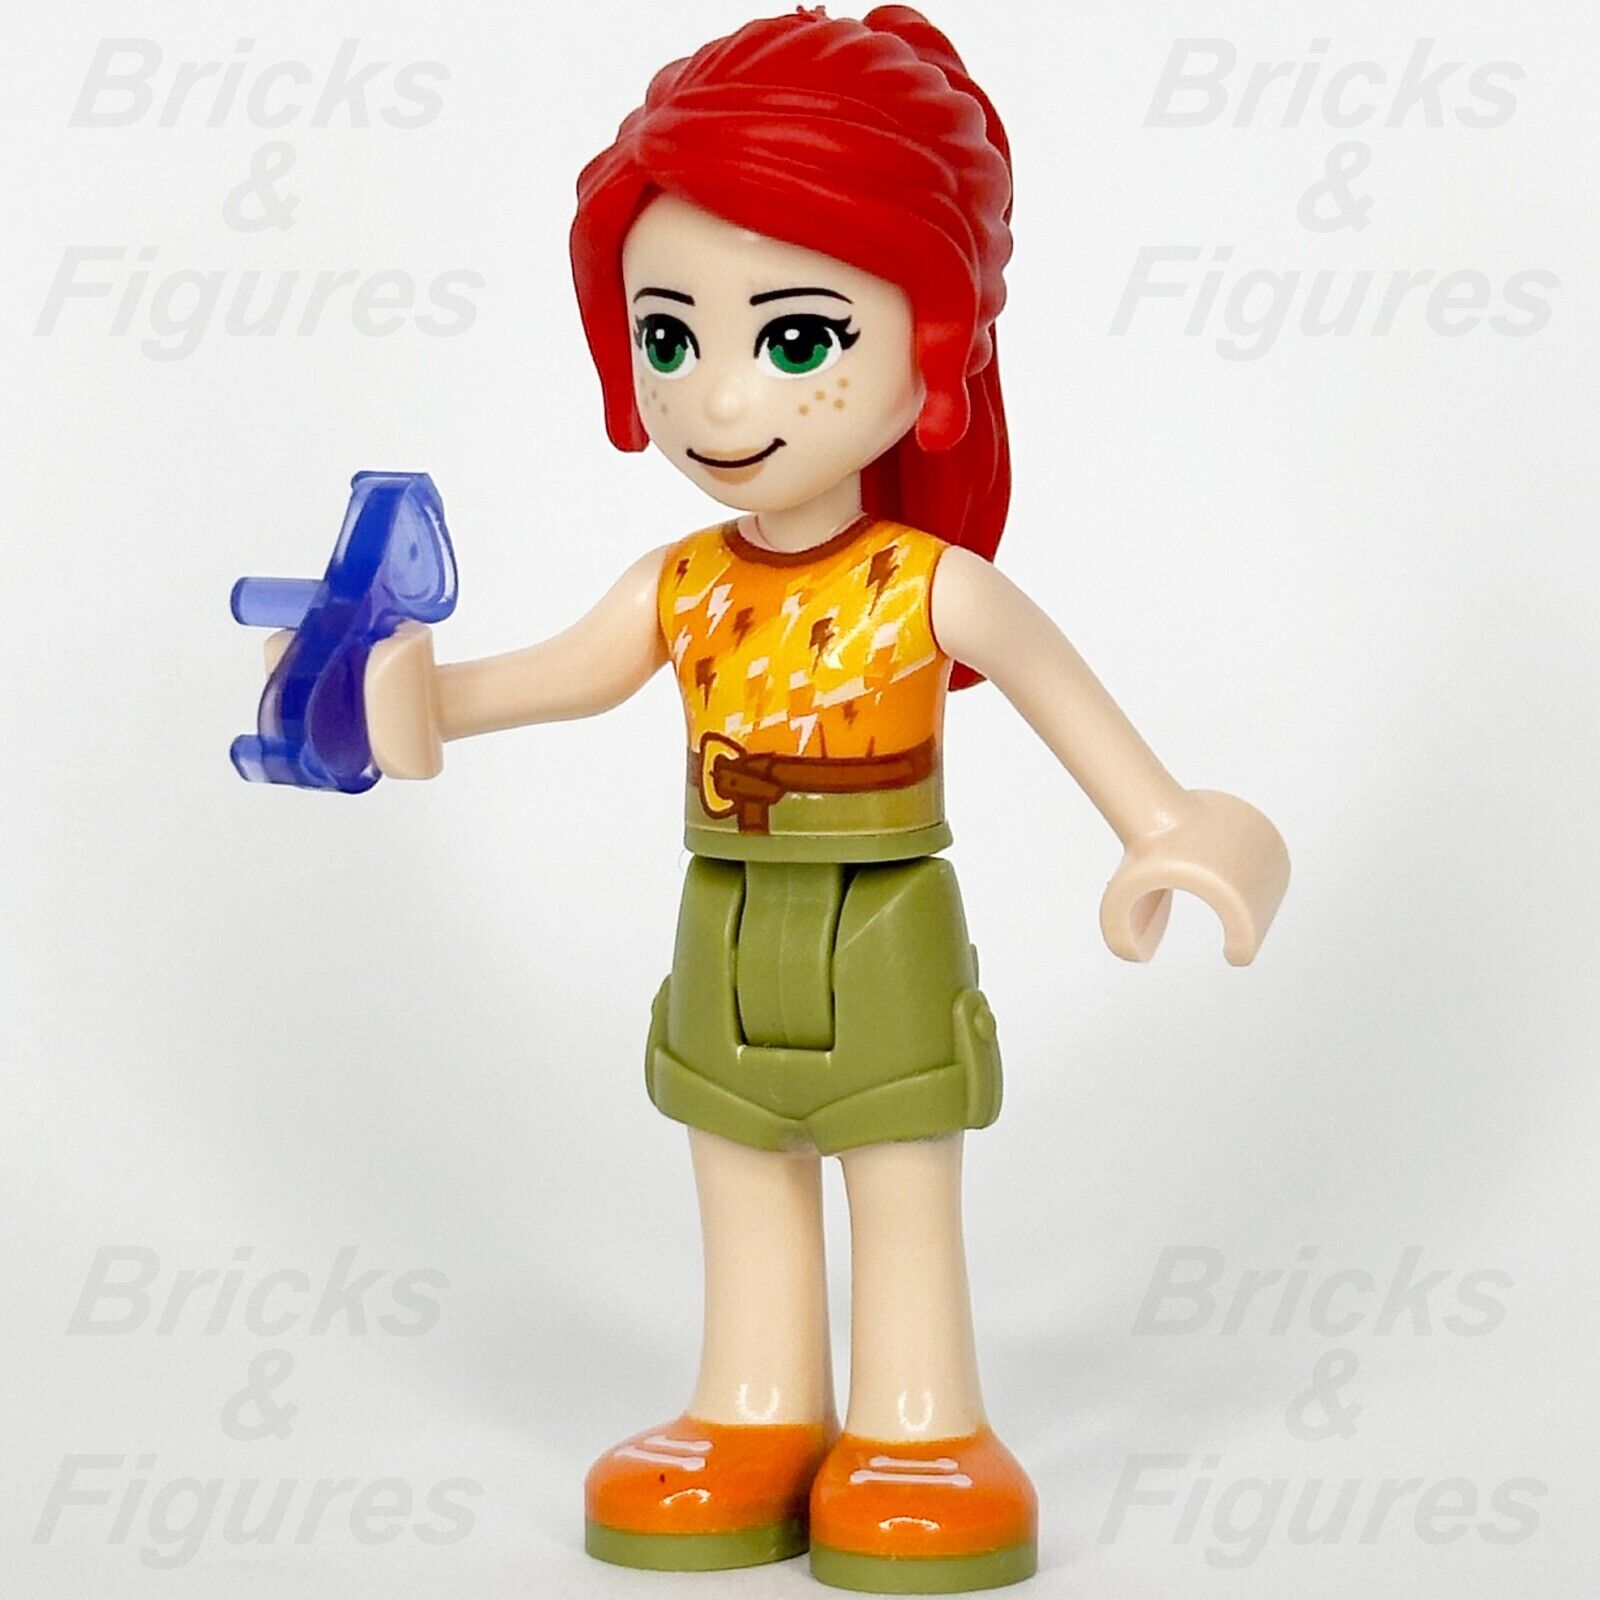 LEGO Friends Mia Minifigure Green Shorts Orange Top Sunglasses 41426 frnd388